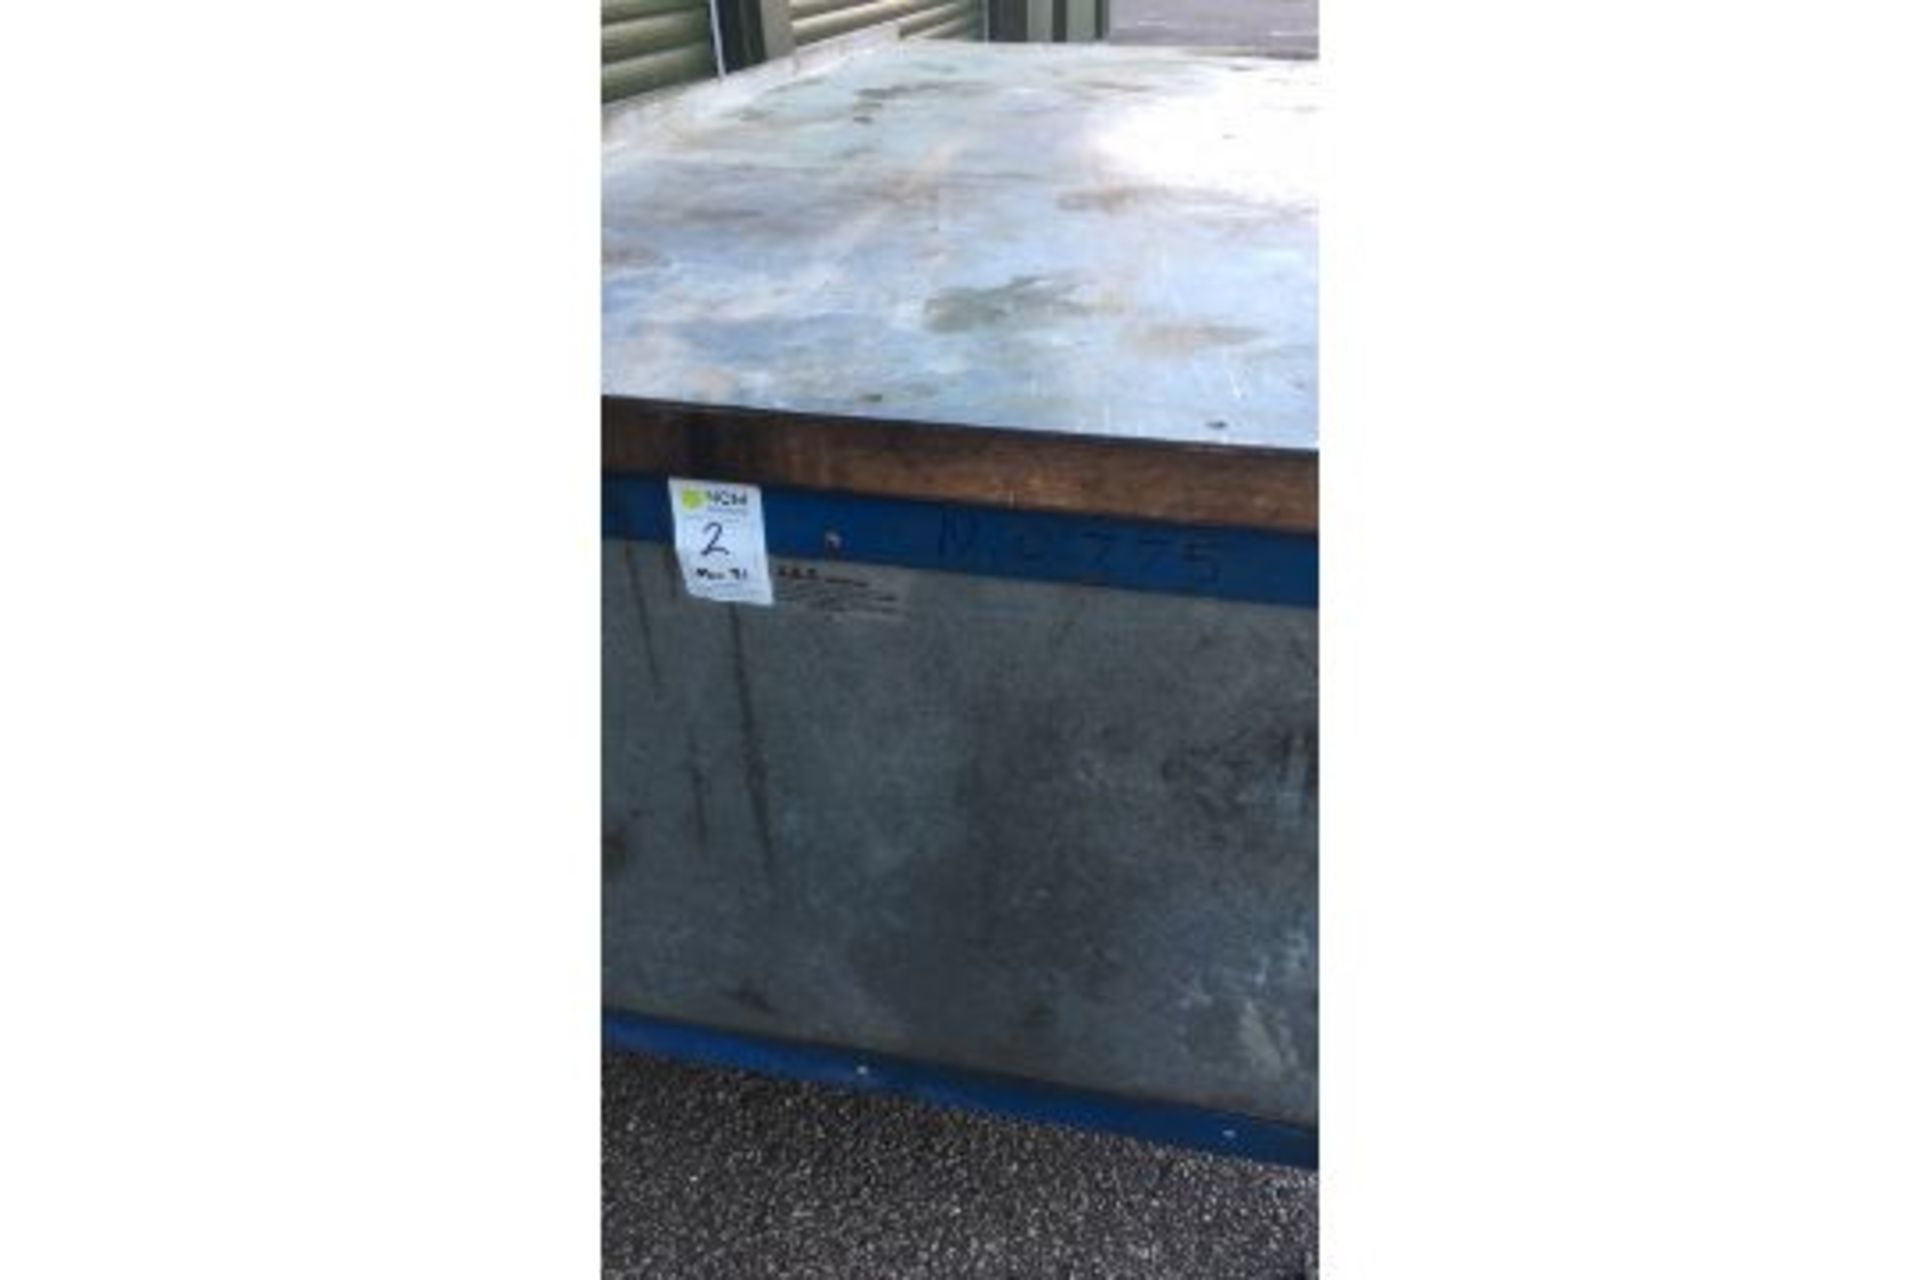 Benchmaster Steel framed work bench with locker - Image 3 of 3